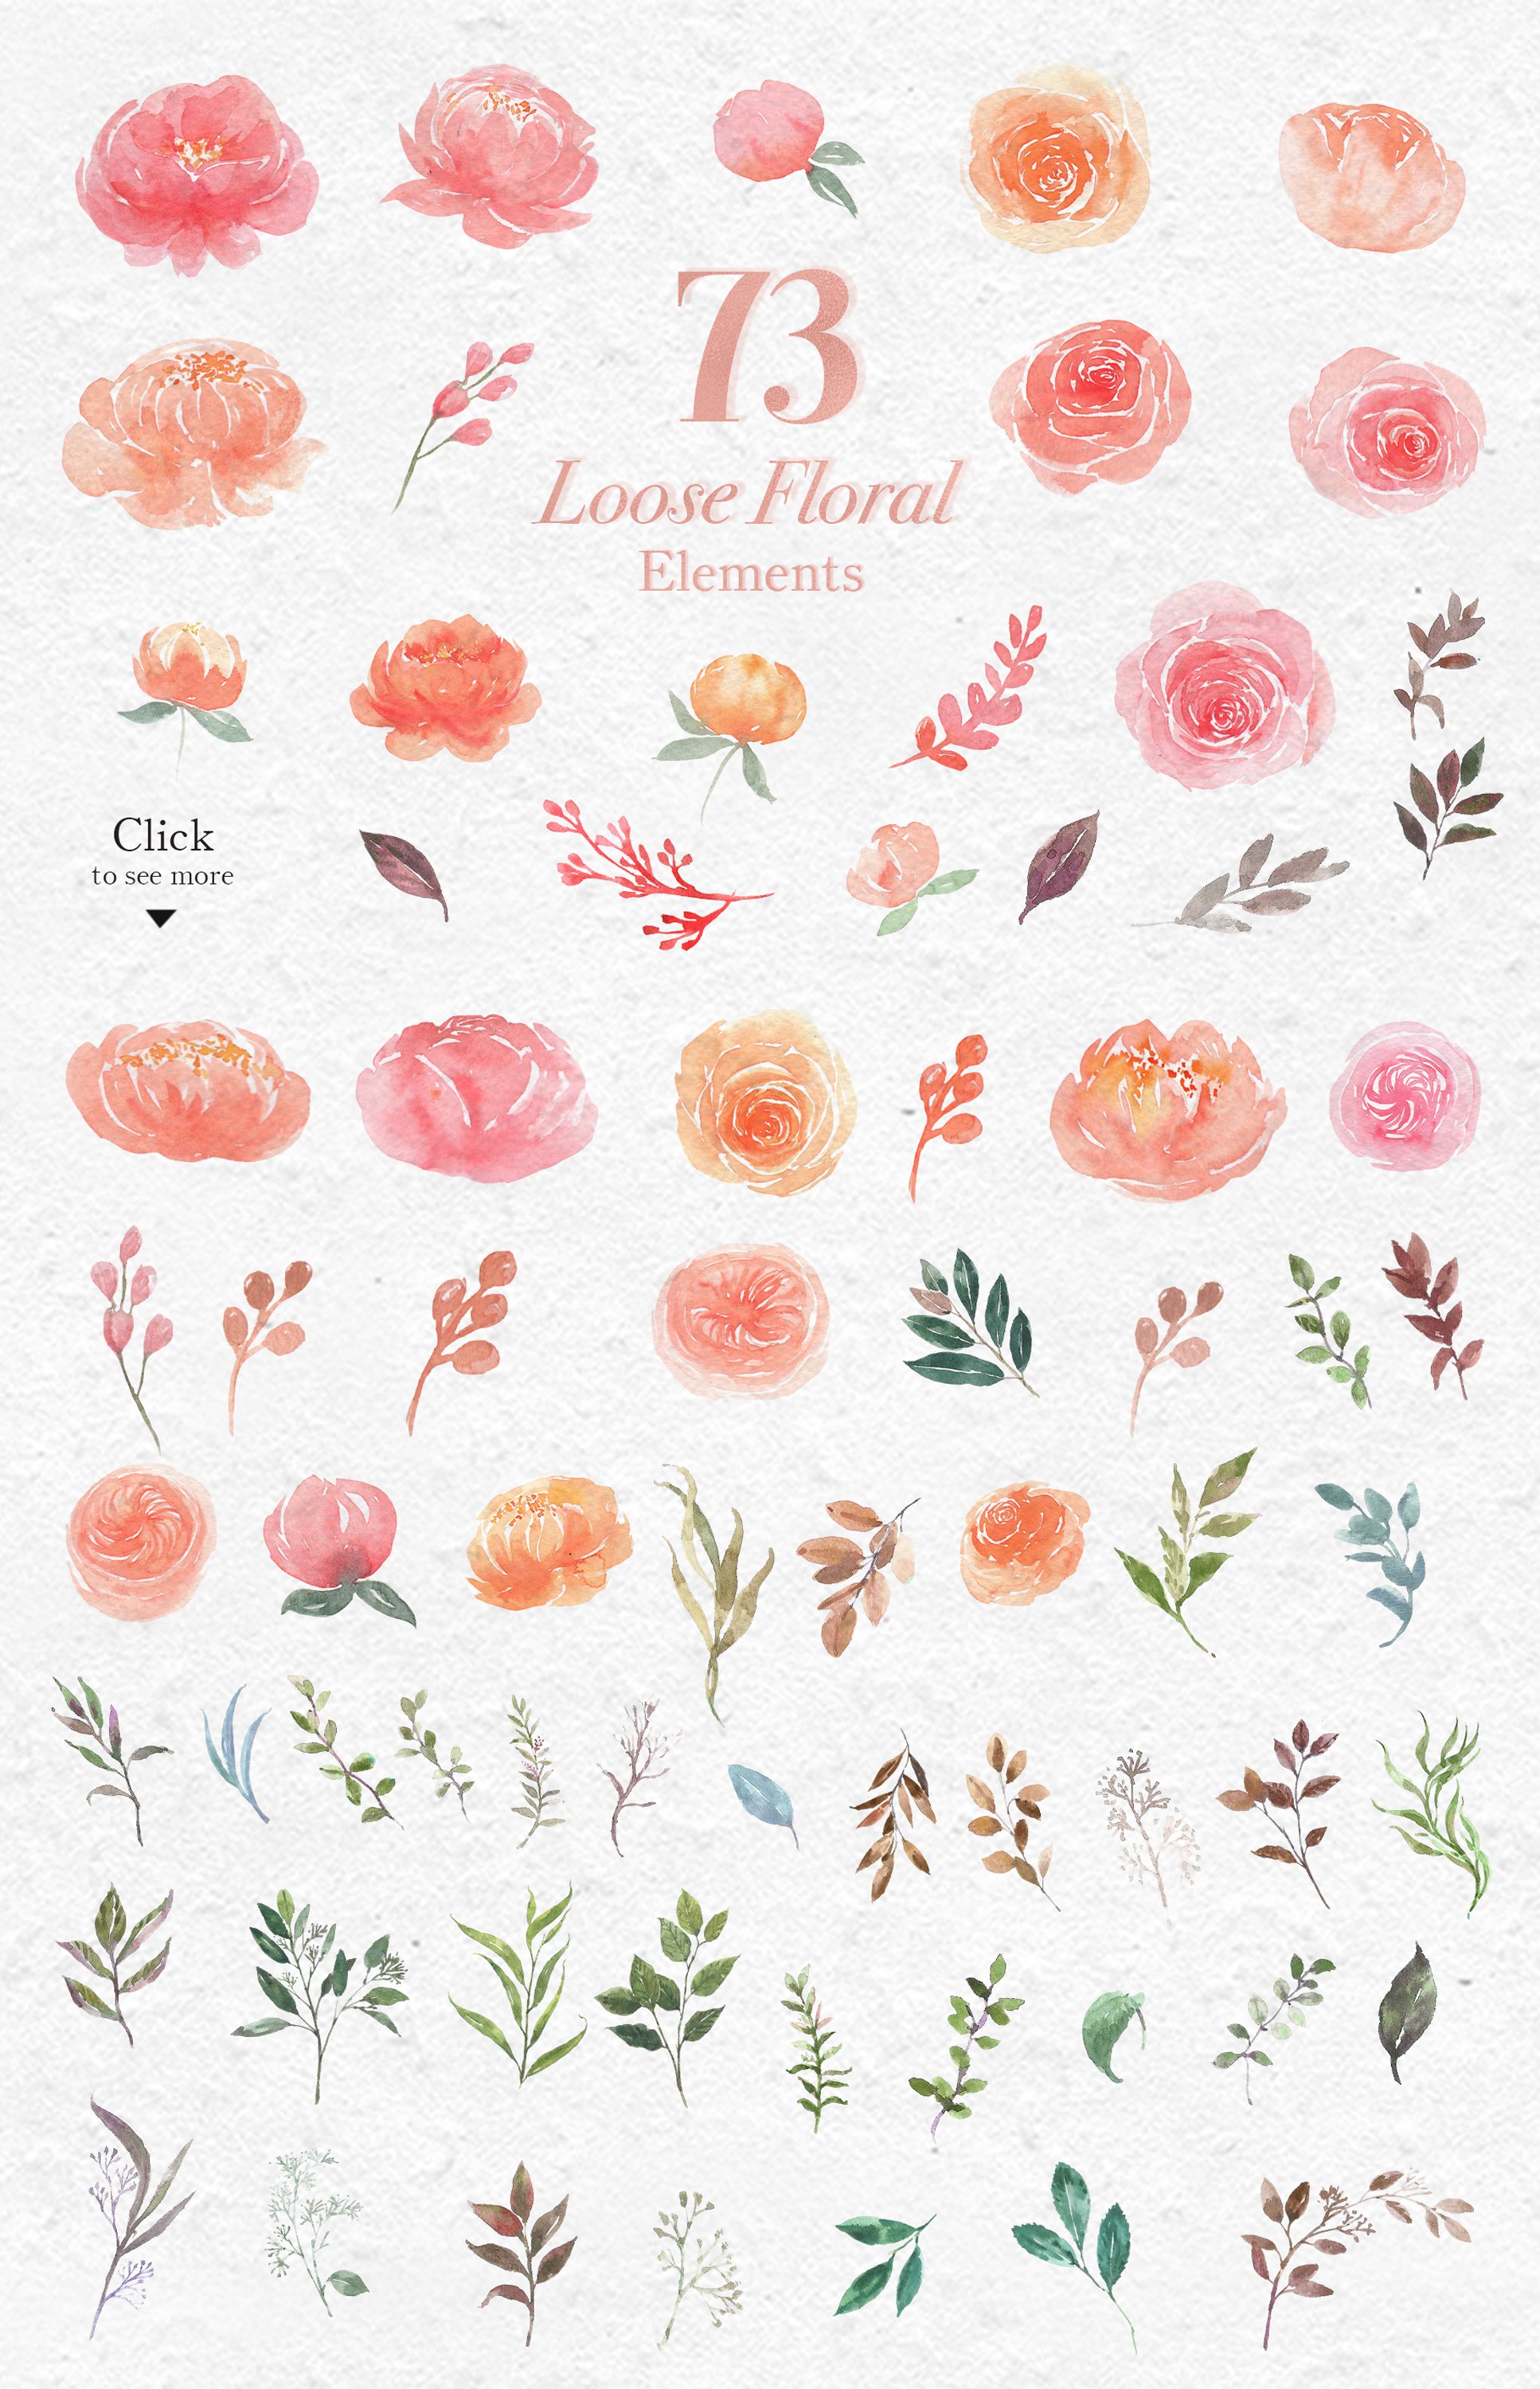 Pink Loose Florals Watercolor